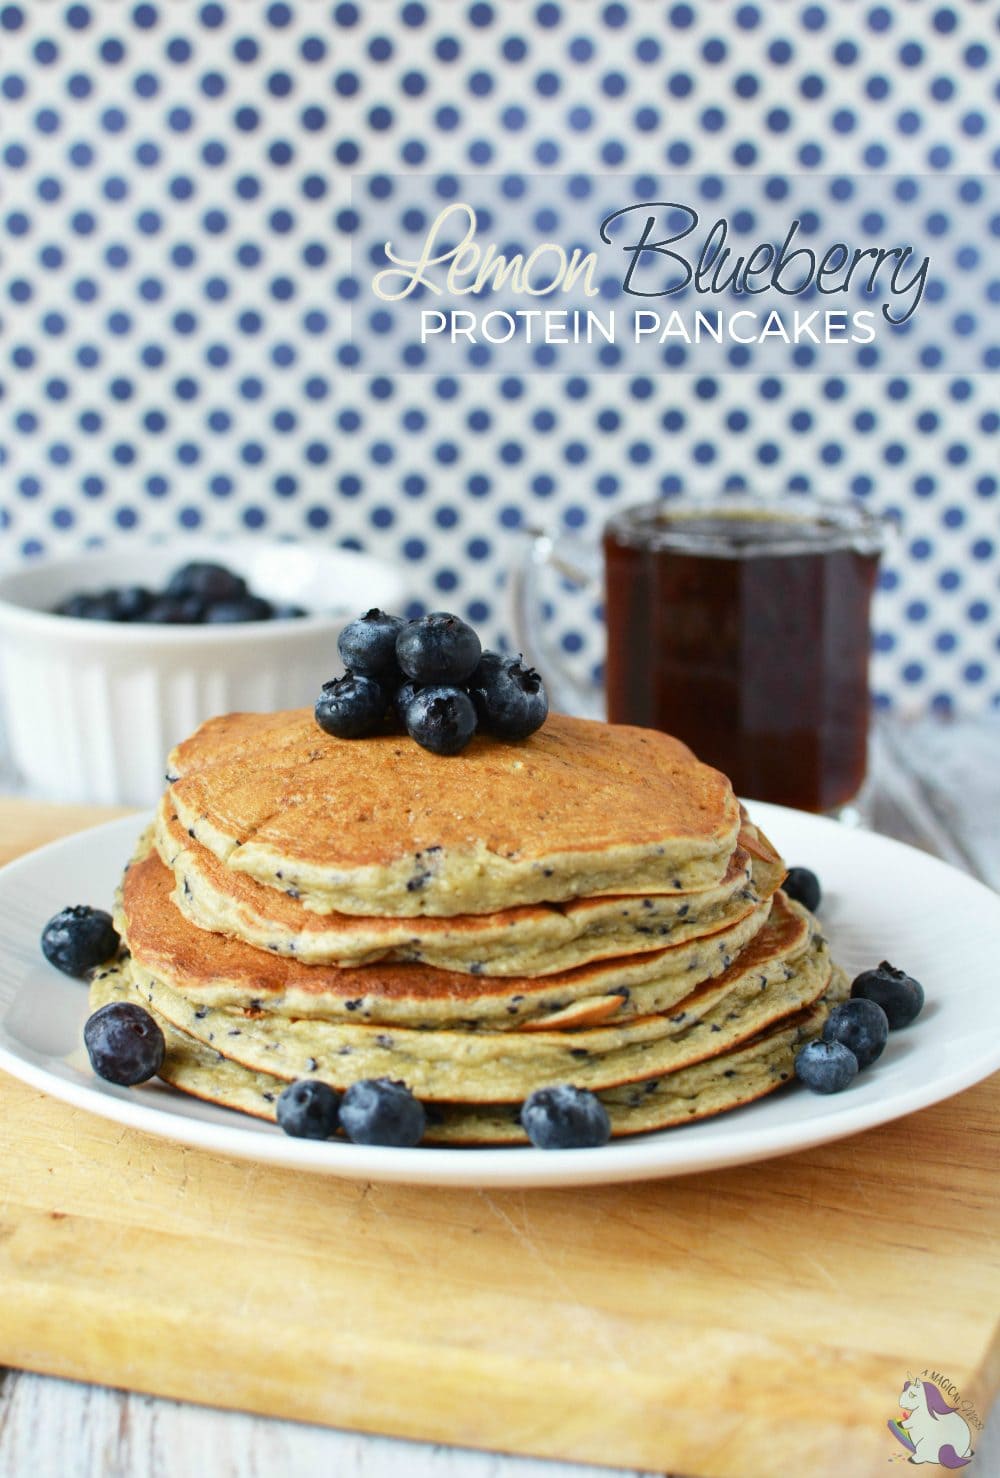 Best Protein Powder Pancakes - Lemon Blueberry 